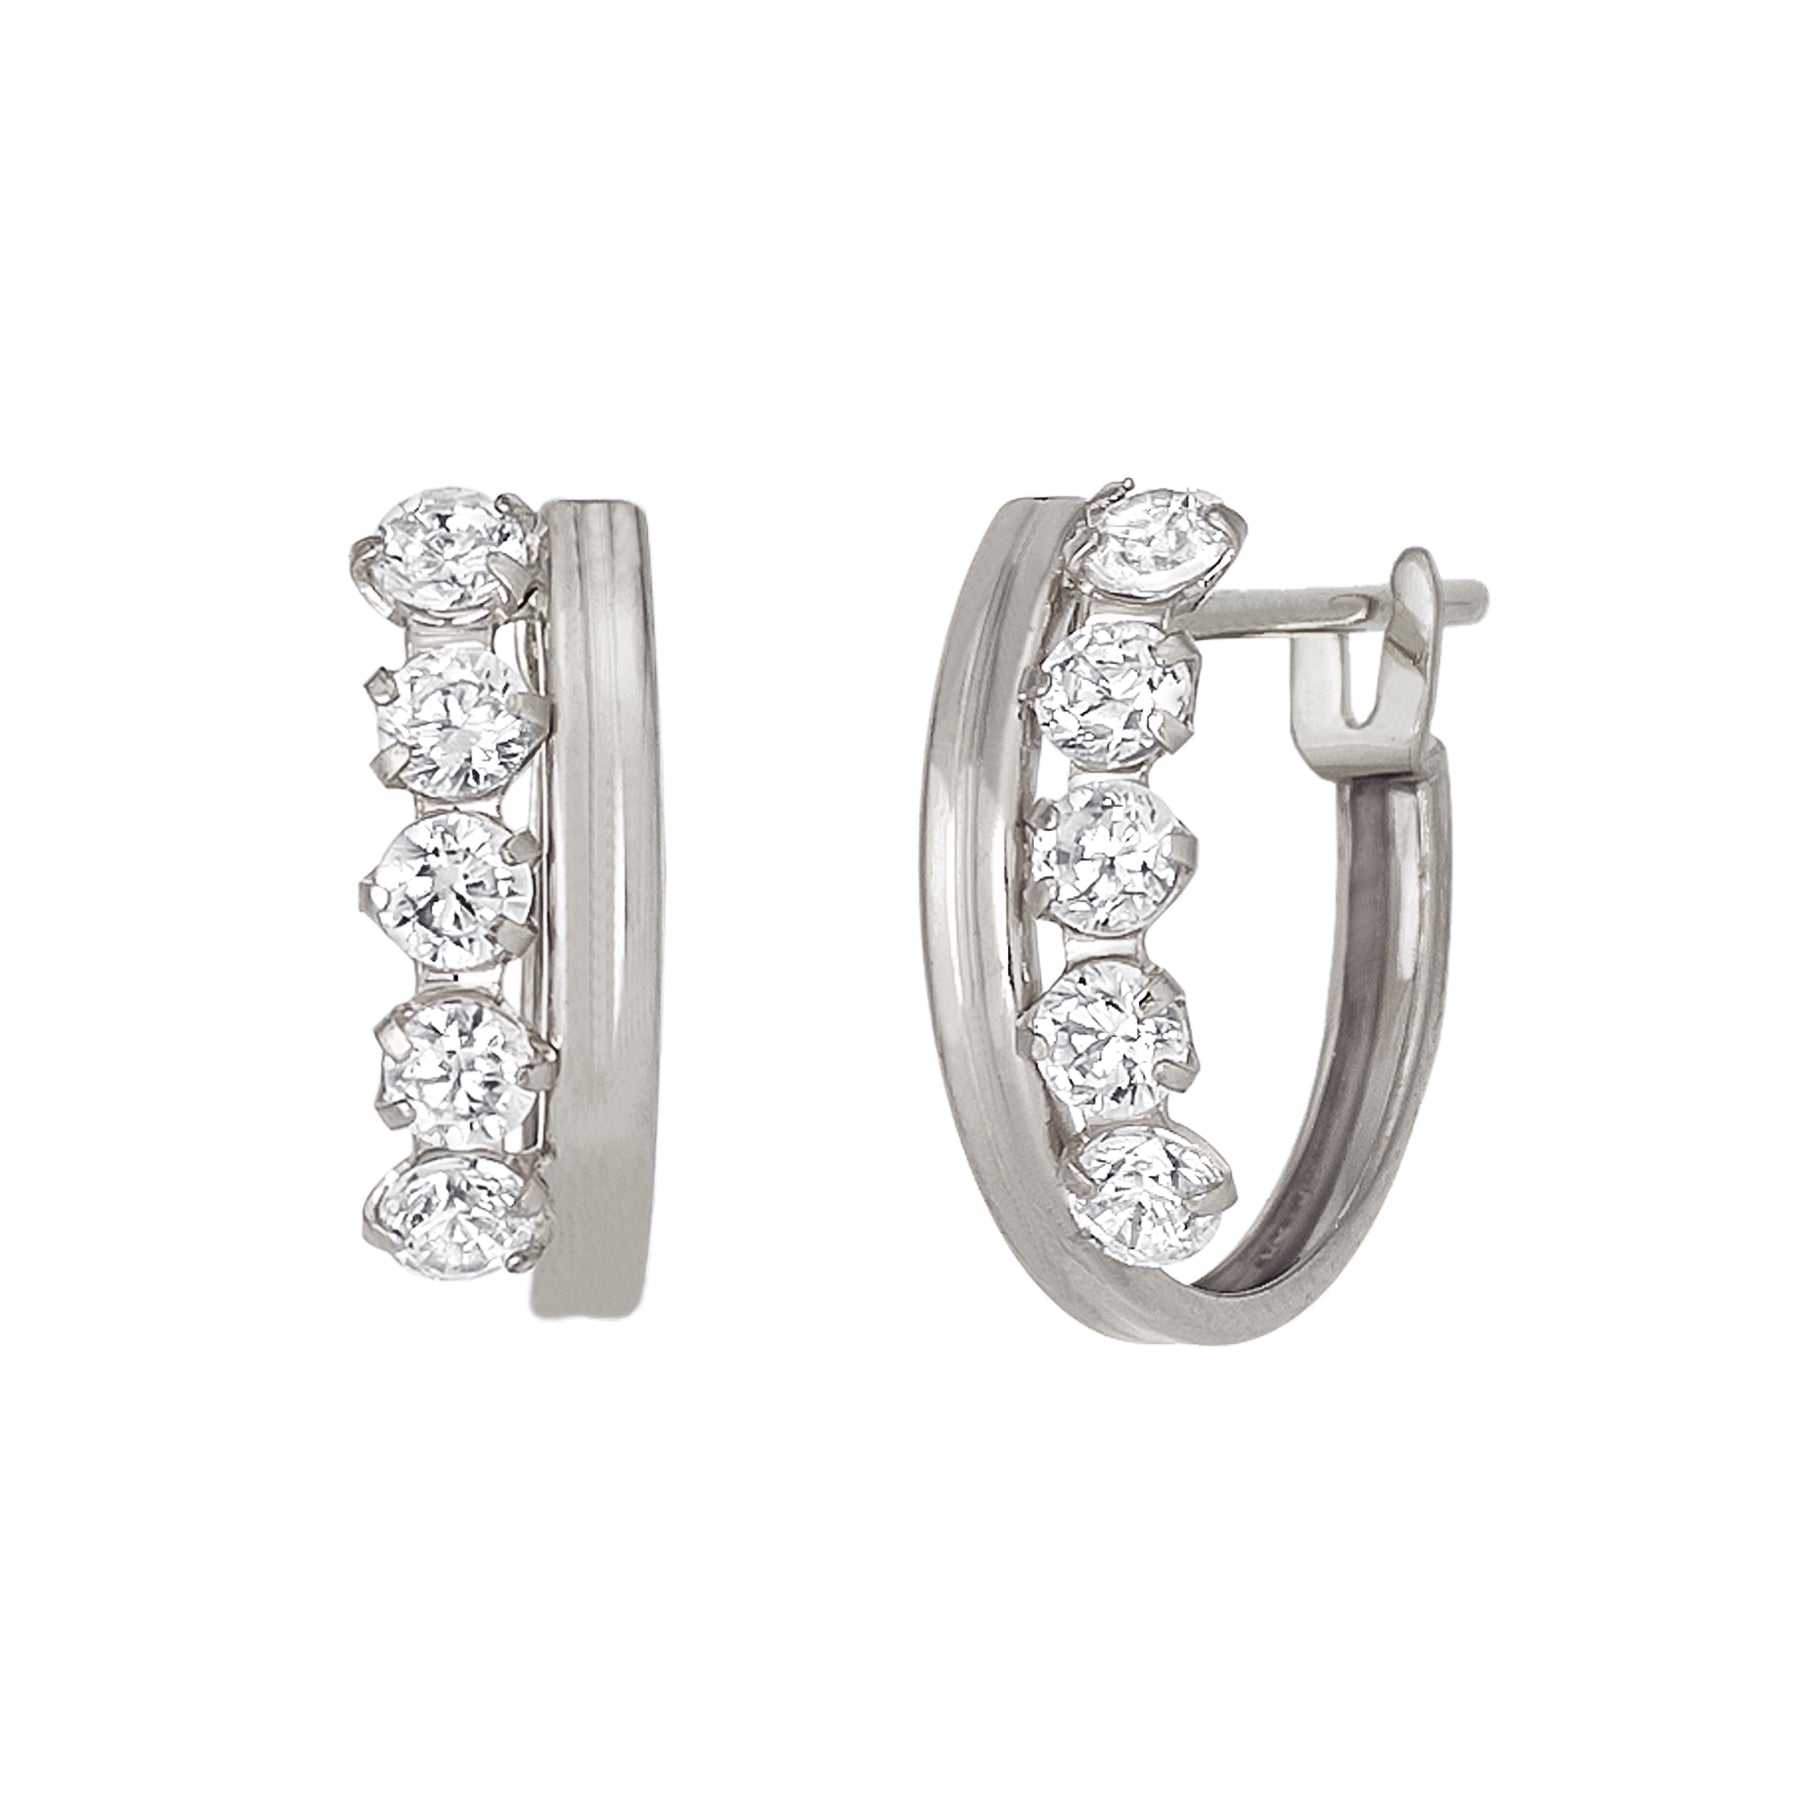 14K/10K White Gold Cubic Zirconia Hoop Earrings - Product Image